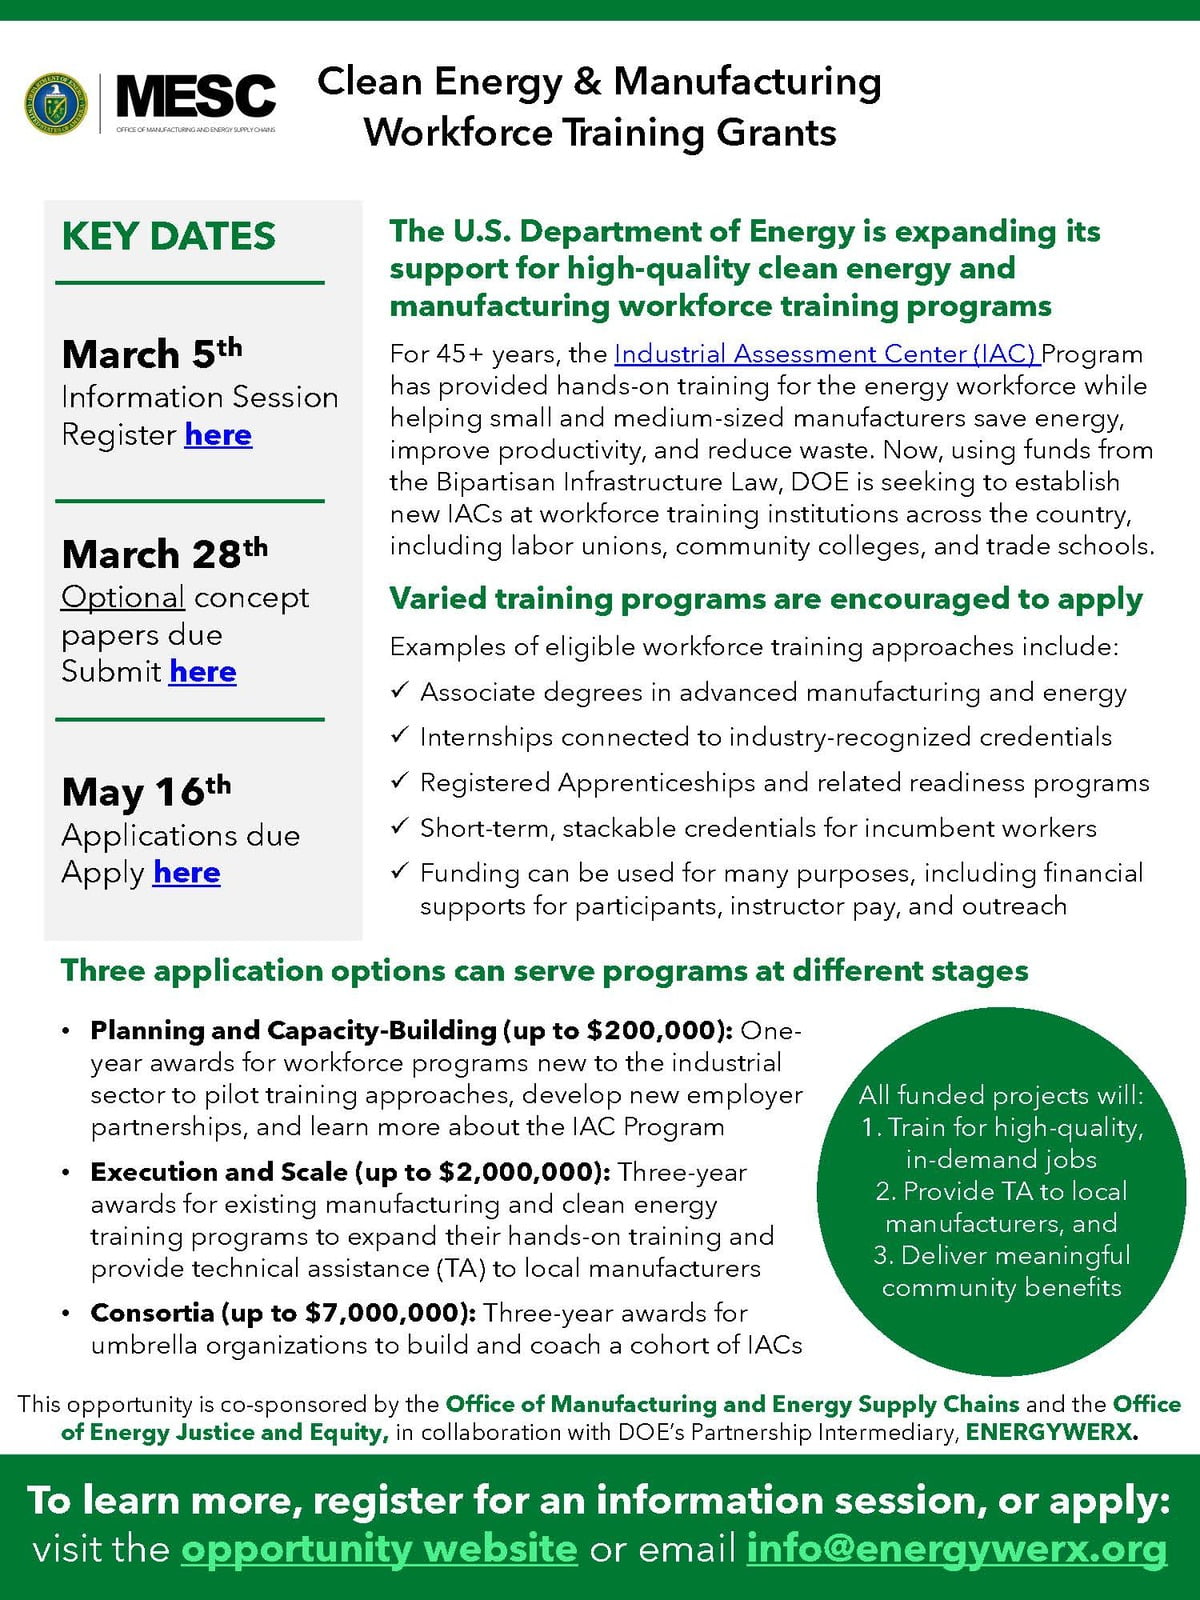 Funding Notice: DOE Clean Energy & Manufacturing Workforce Training Grants